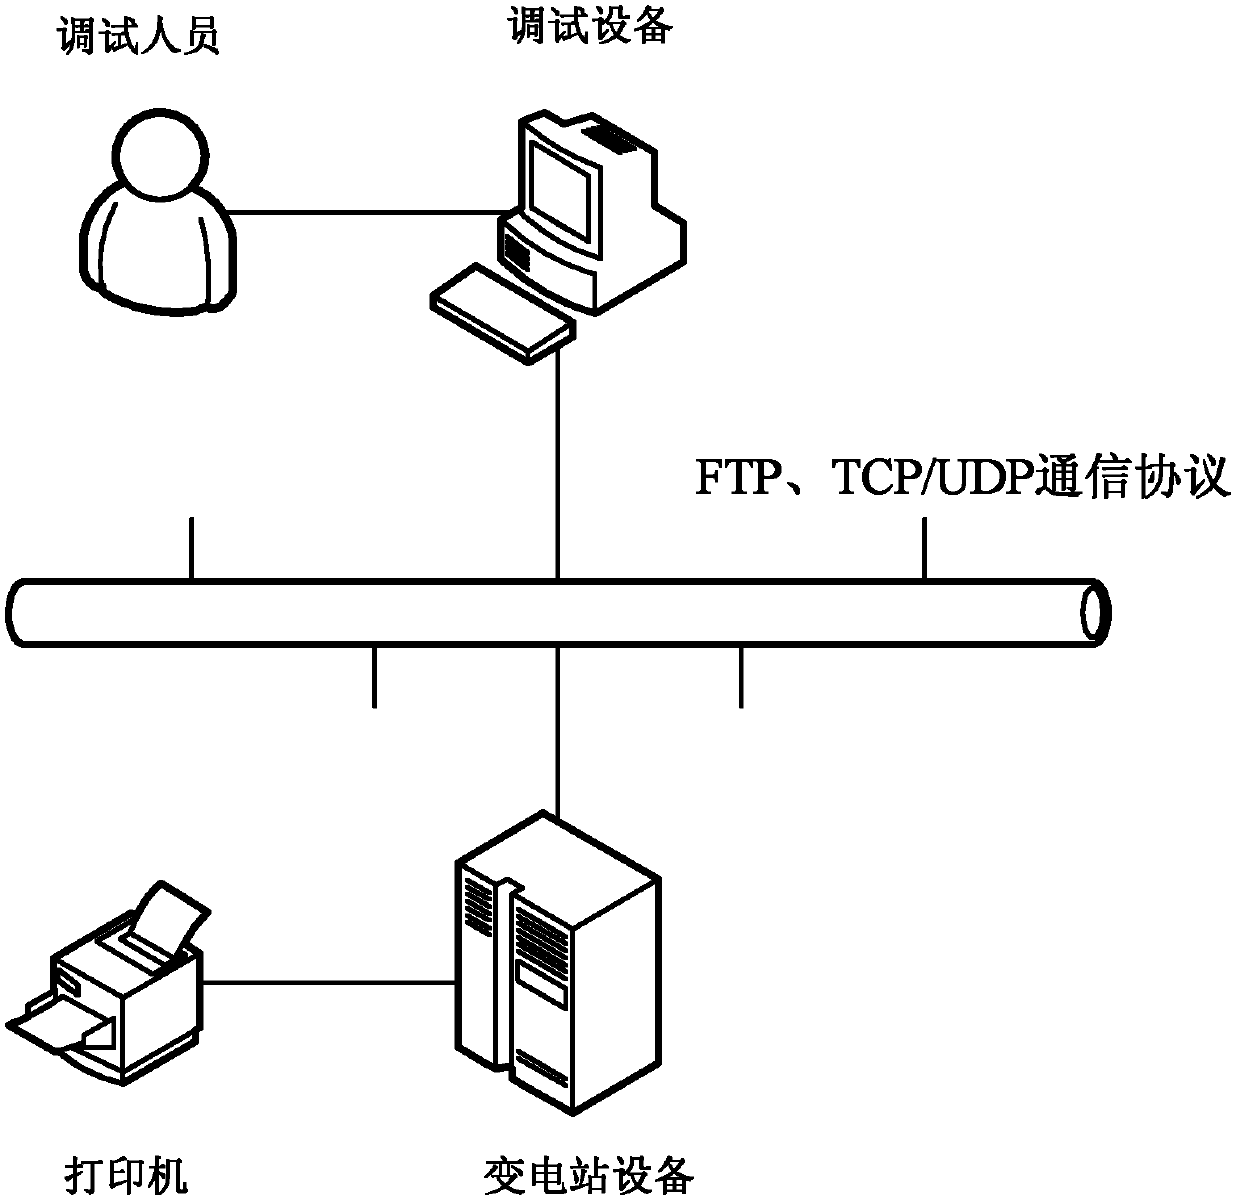 Debugging method for transformer substation equipment